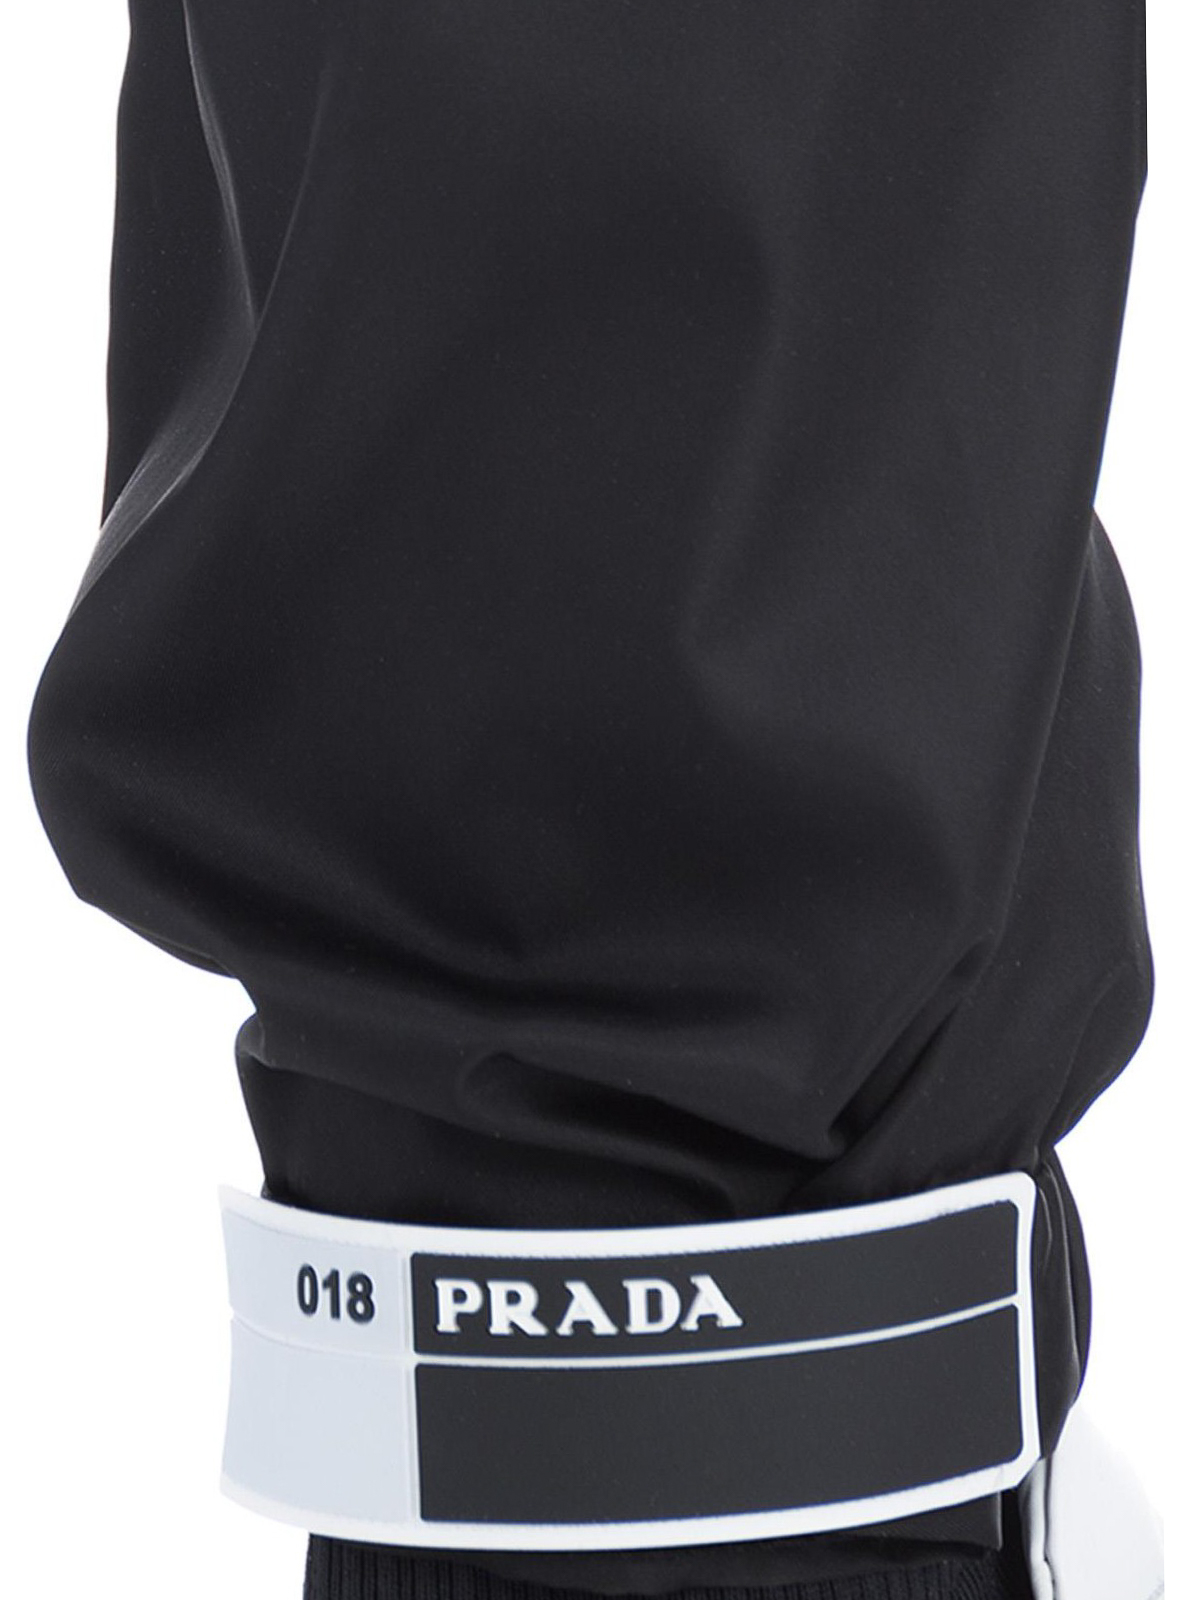 Prada - Sporty chic tracksuit bottoms 